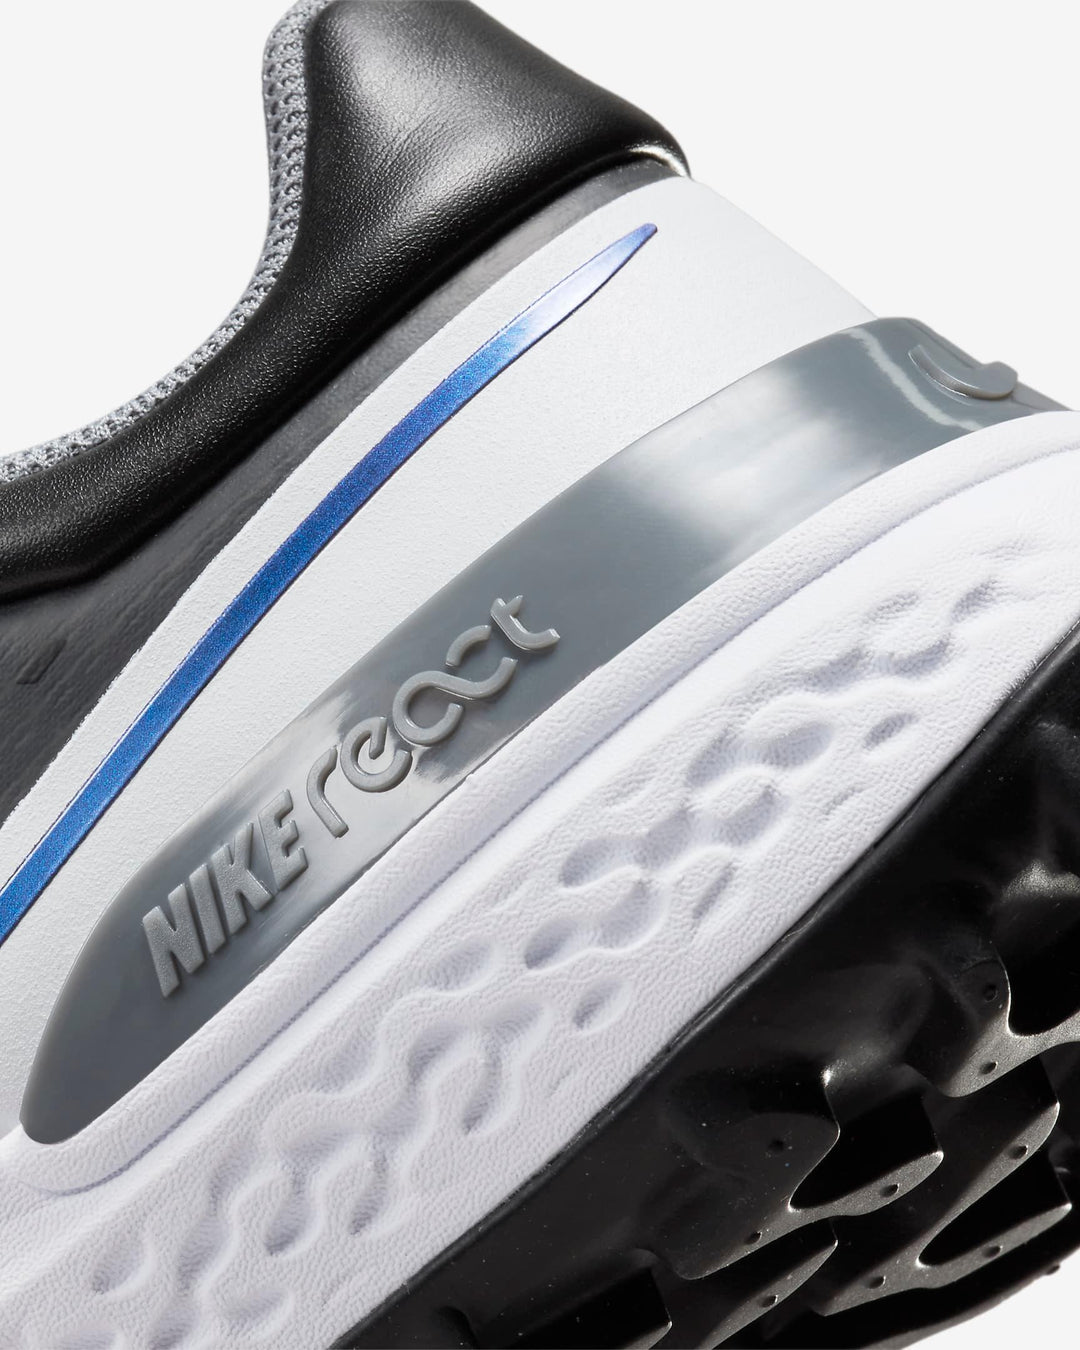 Giày Nike Infinity Pro 2 Men Golf Shoes #Anthracite - Kallos Vietnam